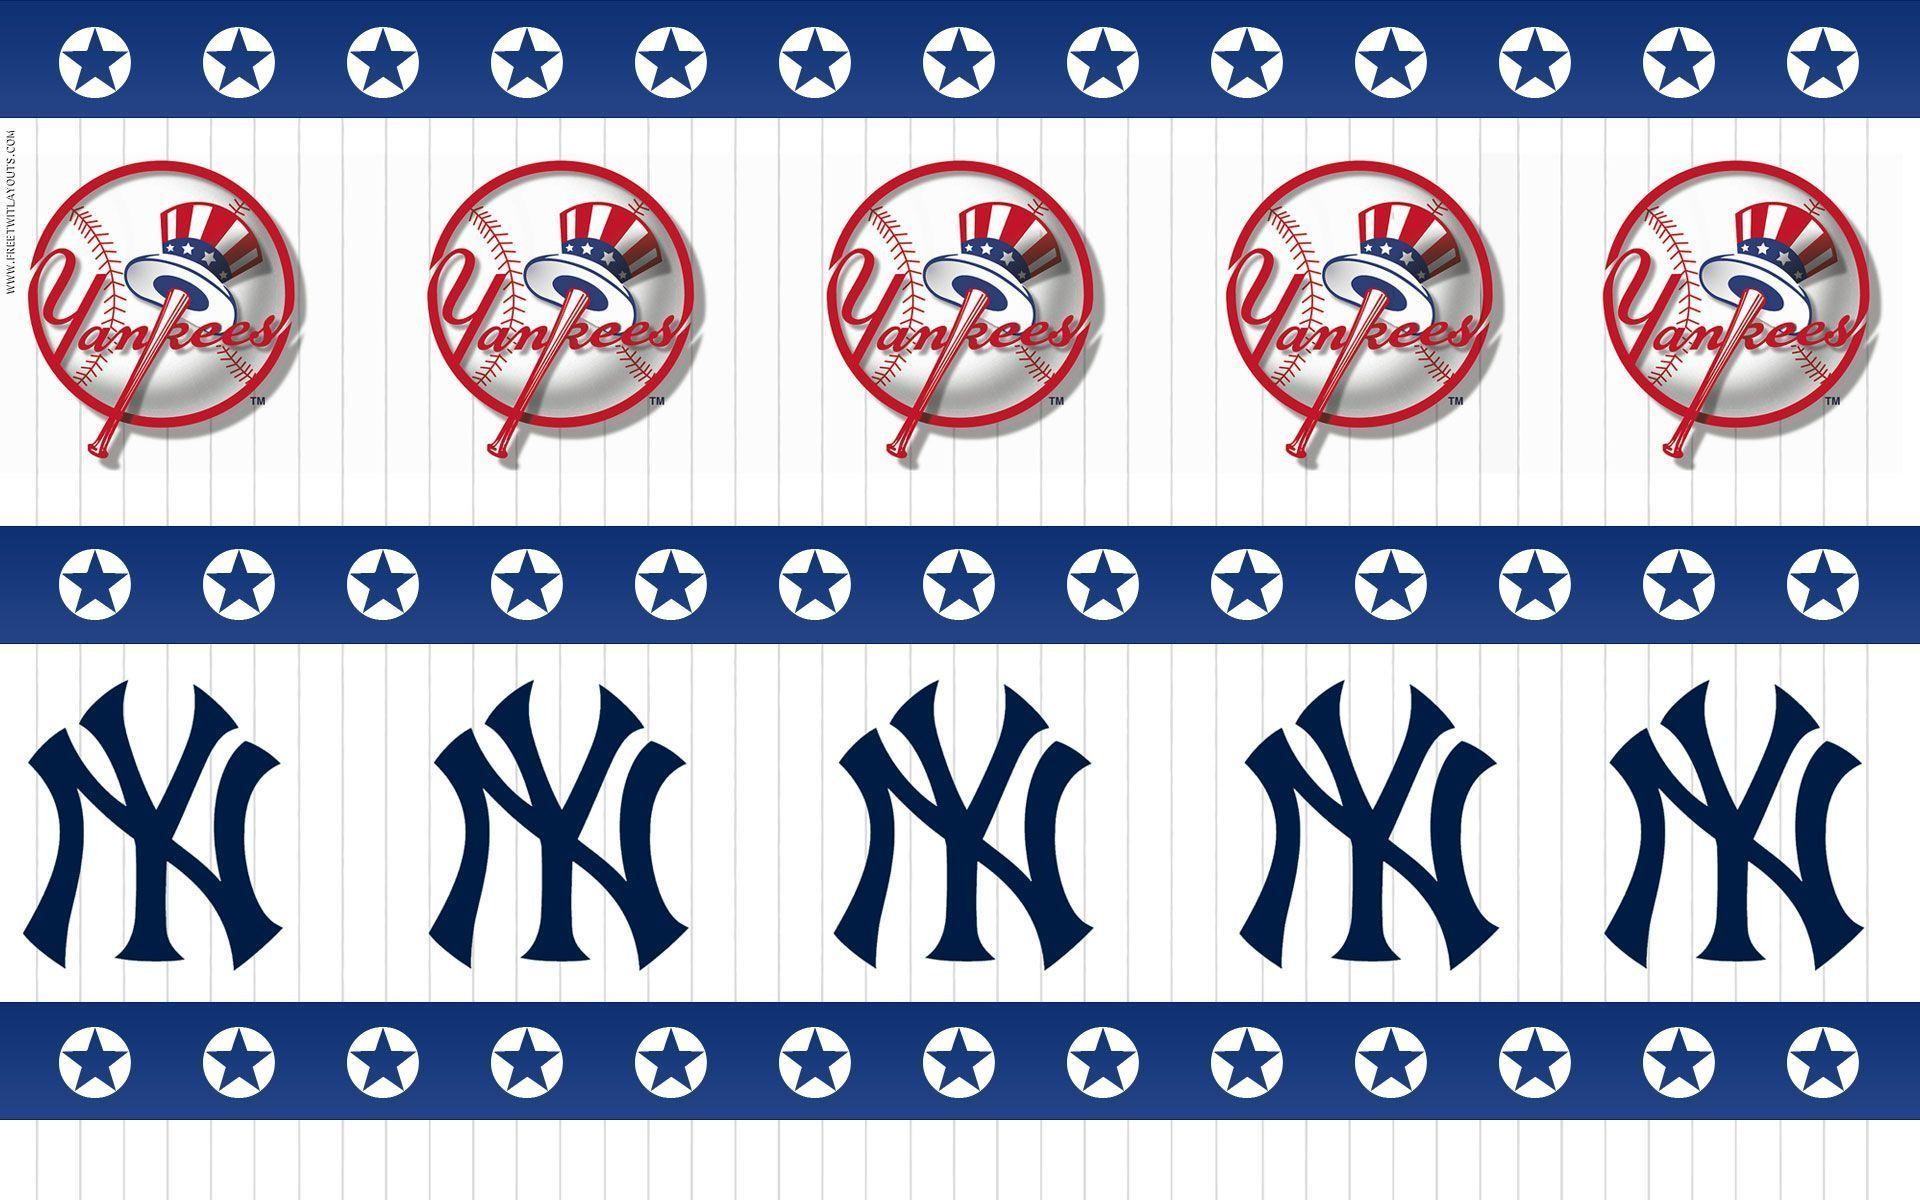 1920x1200 New York Yankees Wallpapers - Full HD wallpaper search